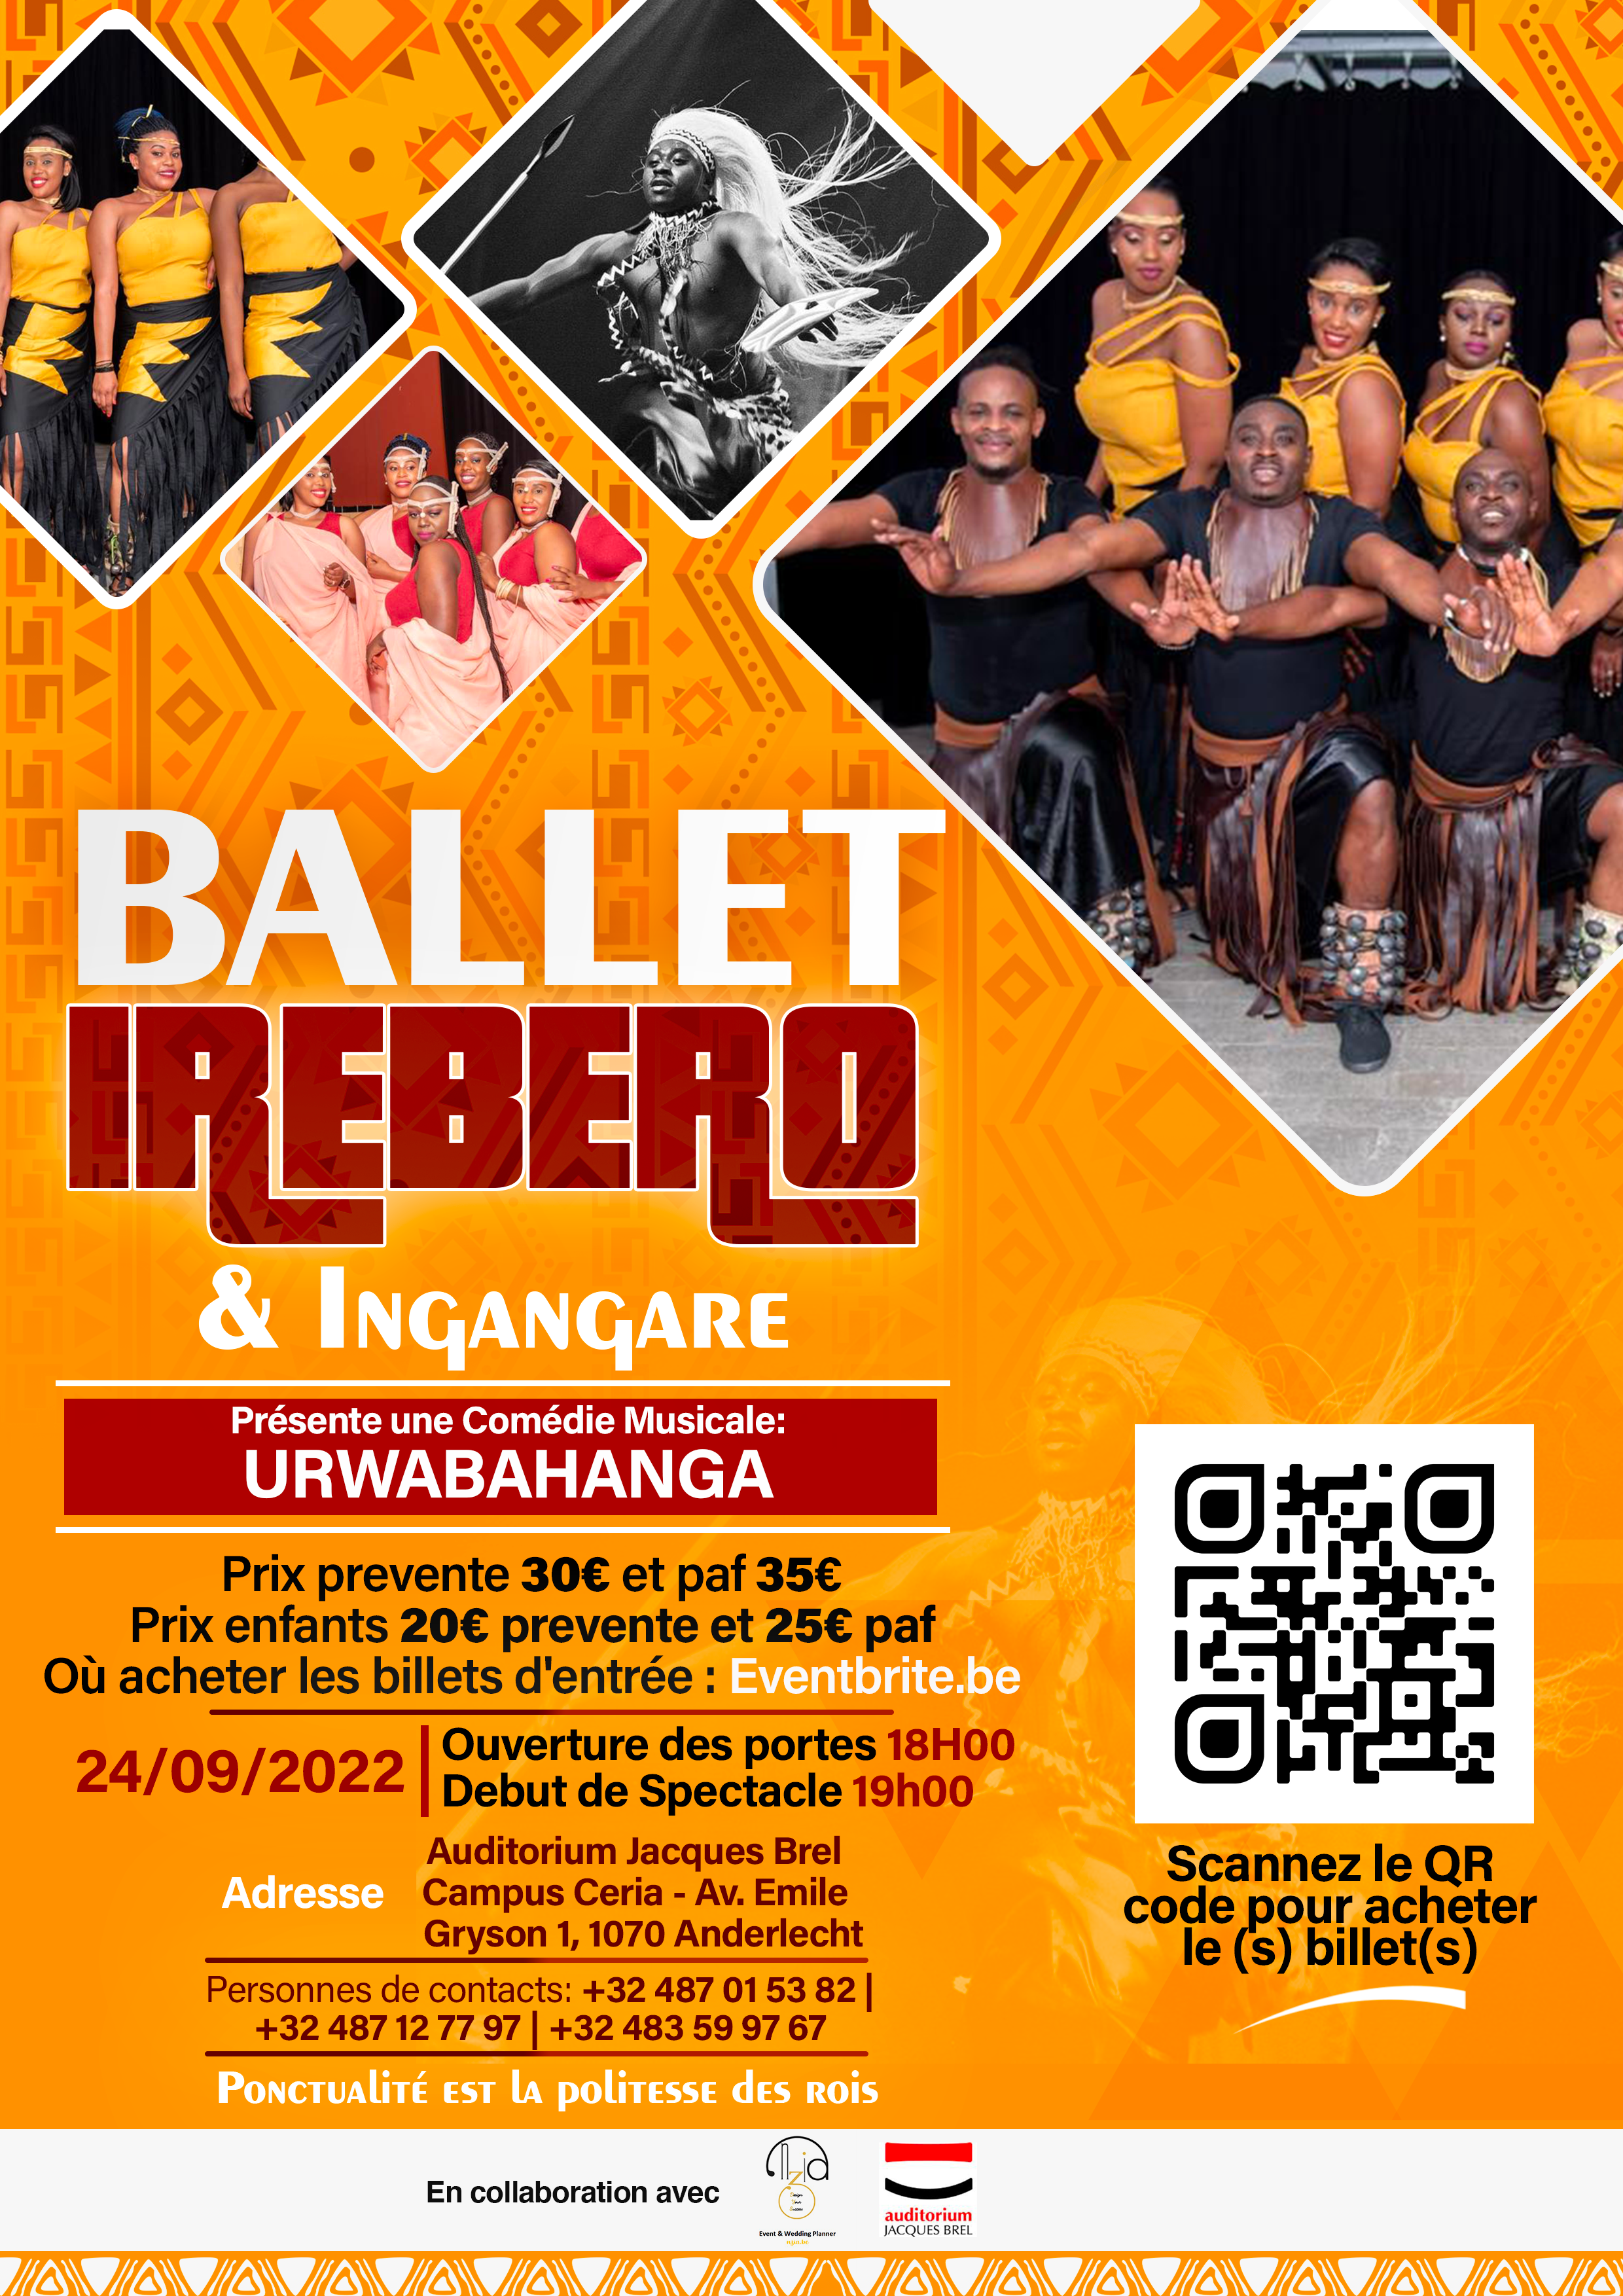 Ballet Irebero & Ingangare